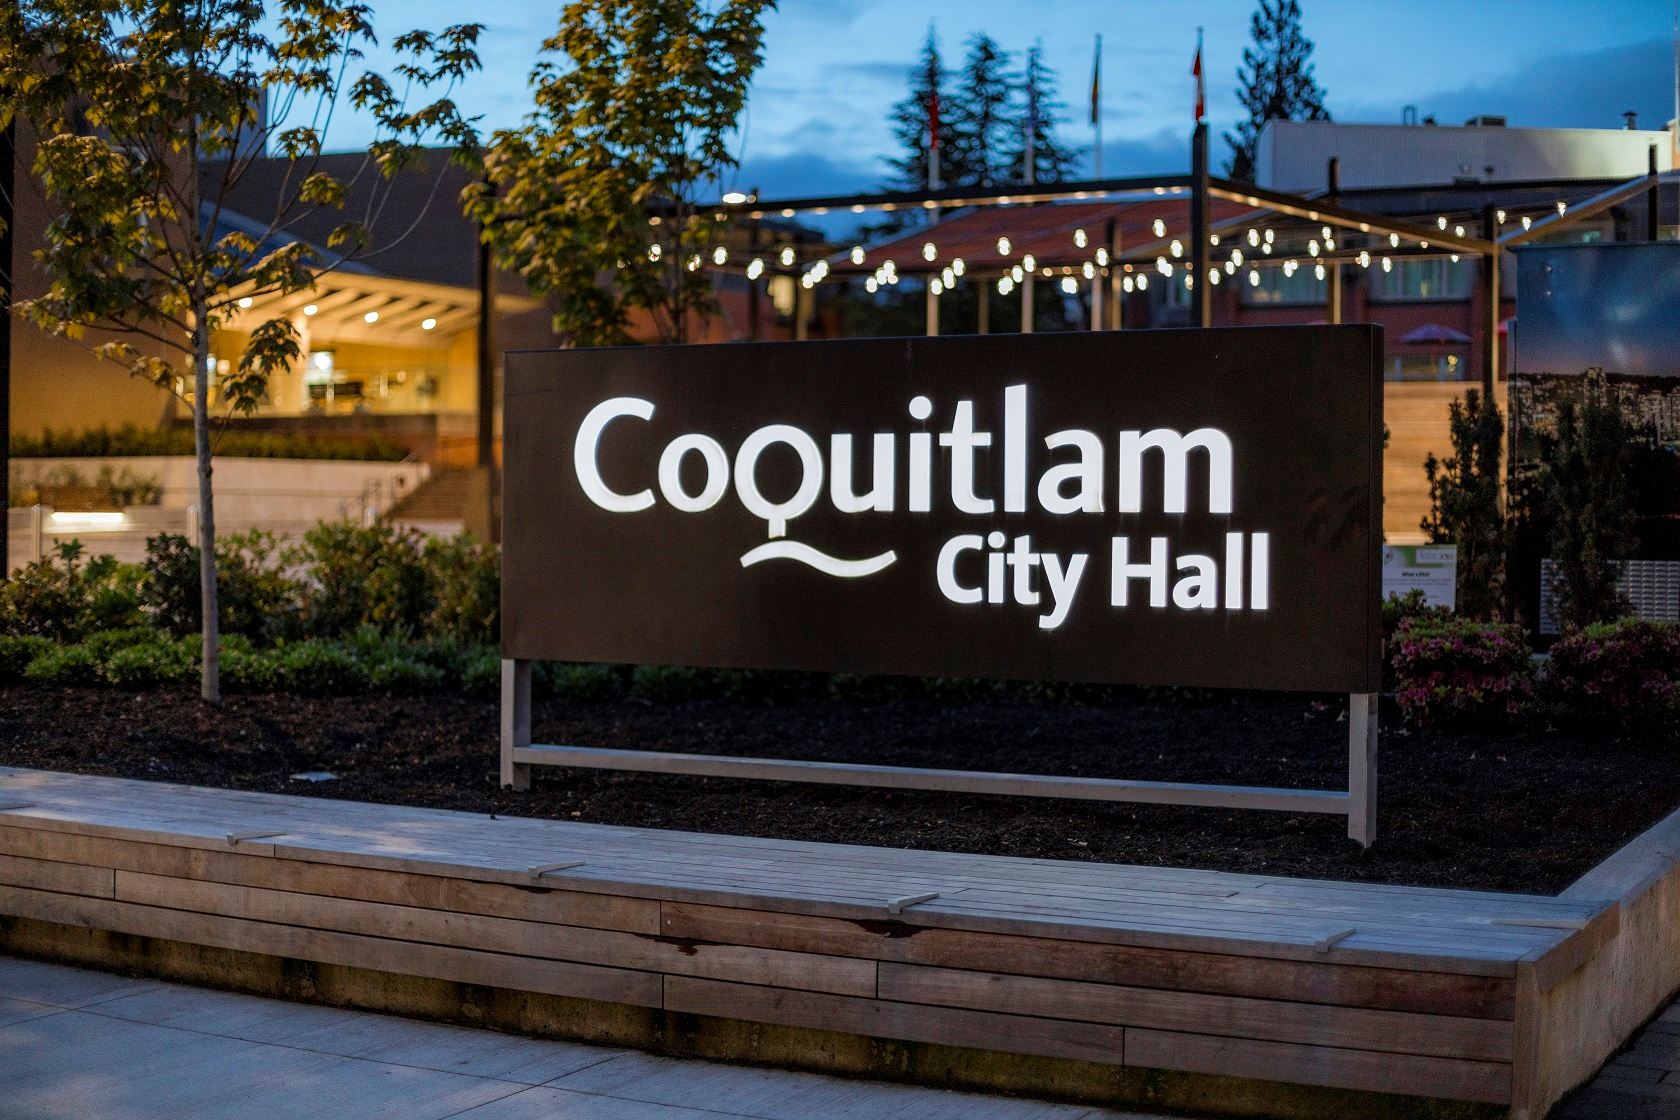 Coquitlam City Hall